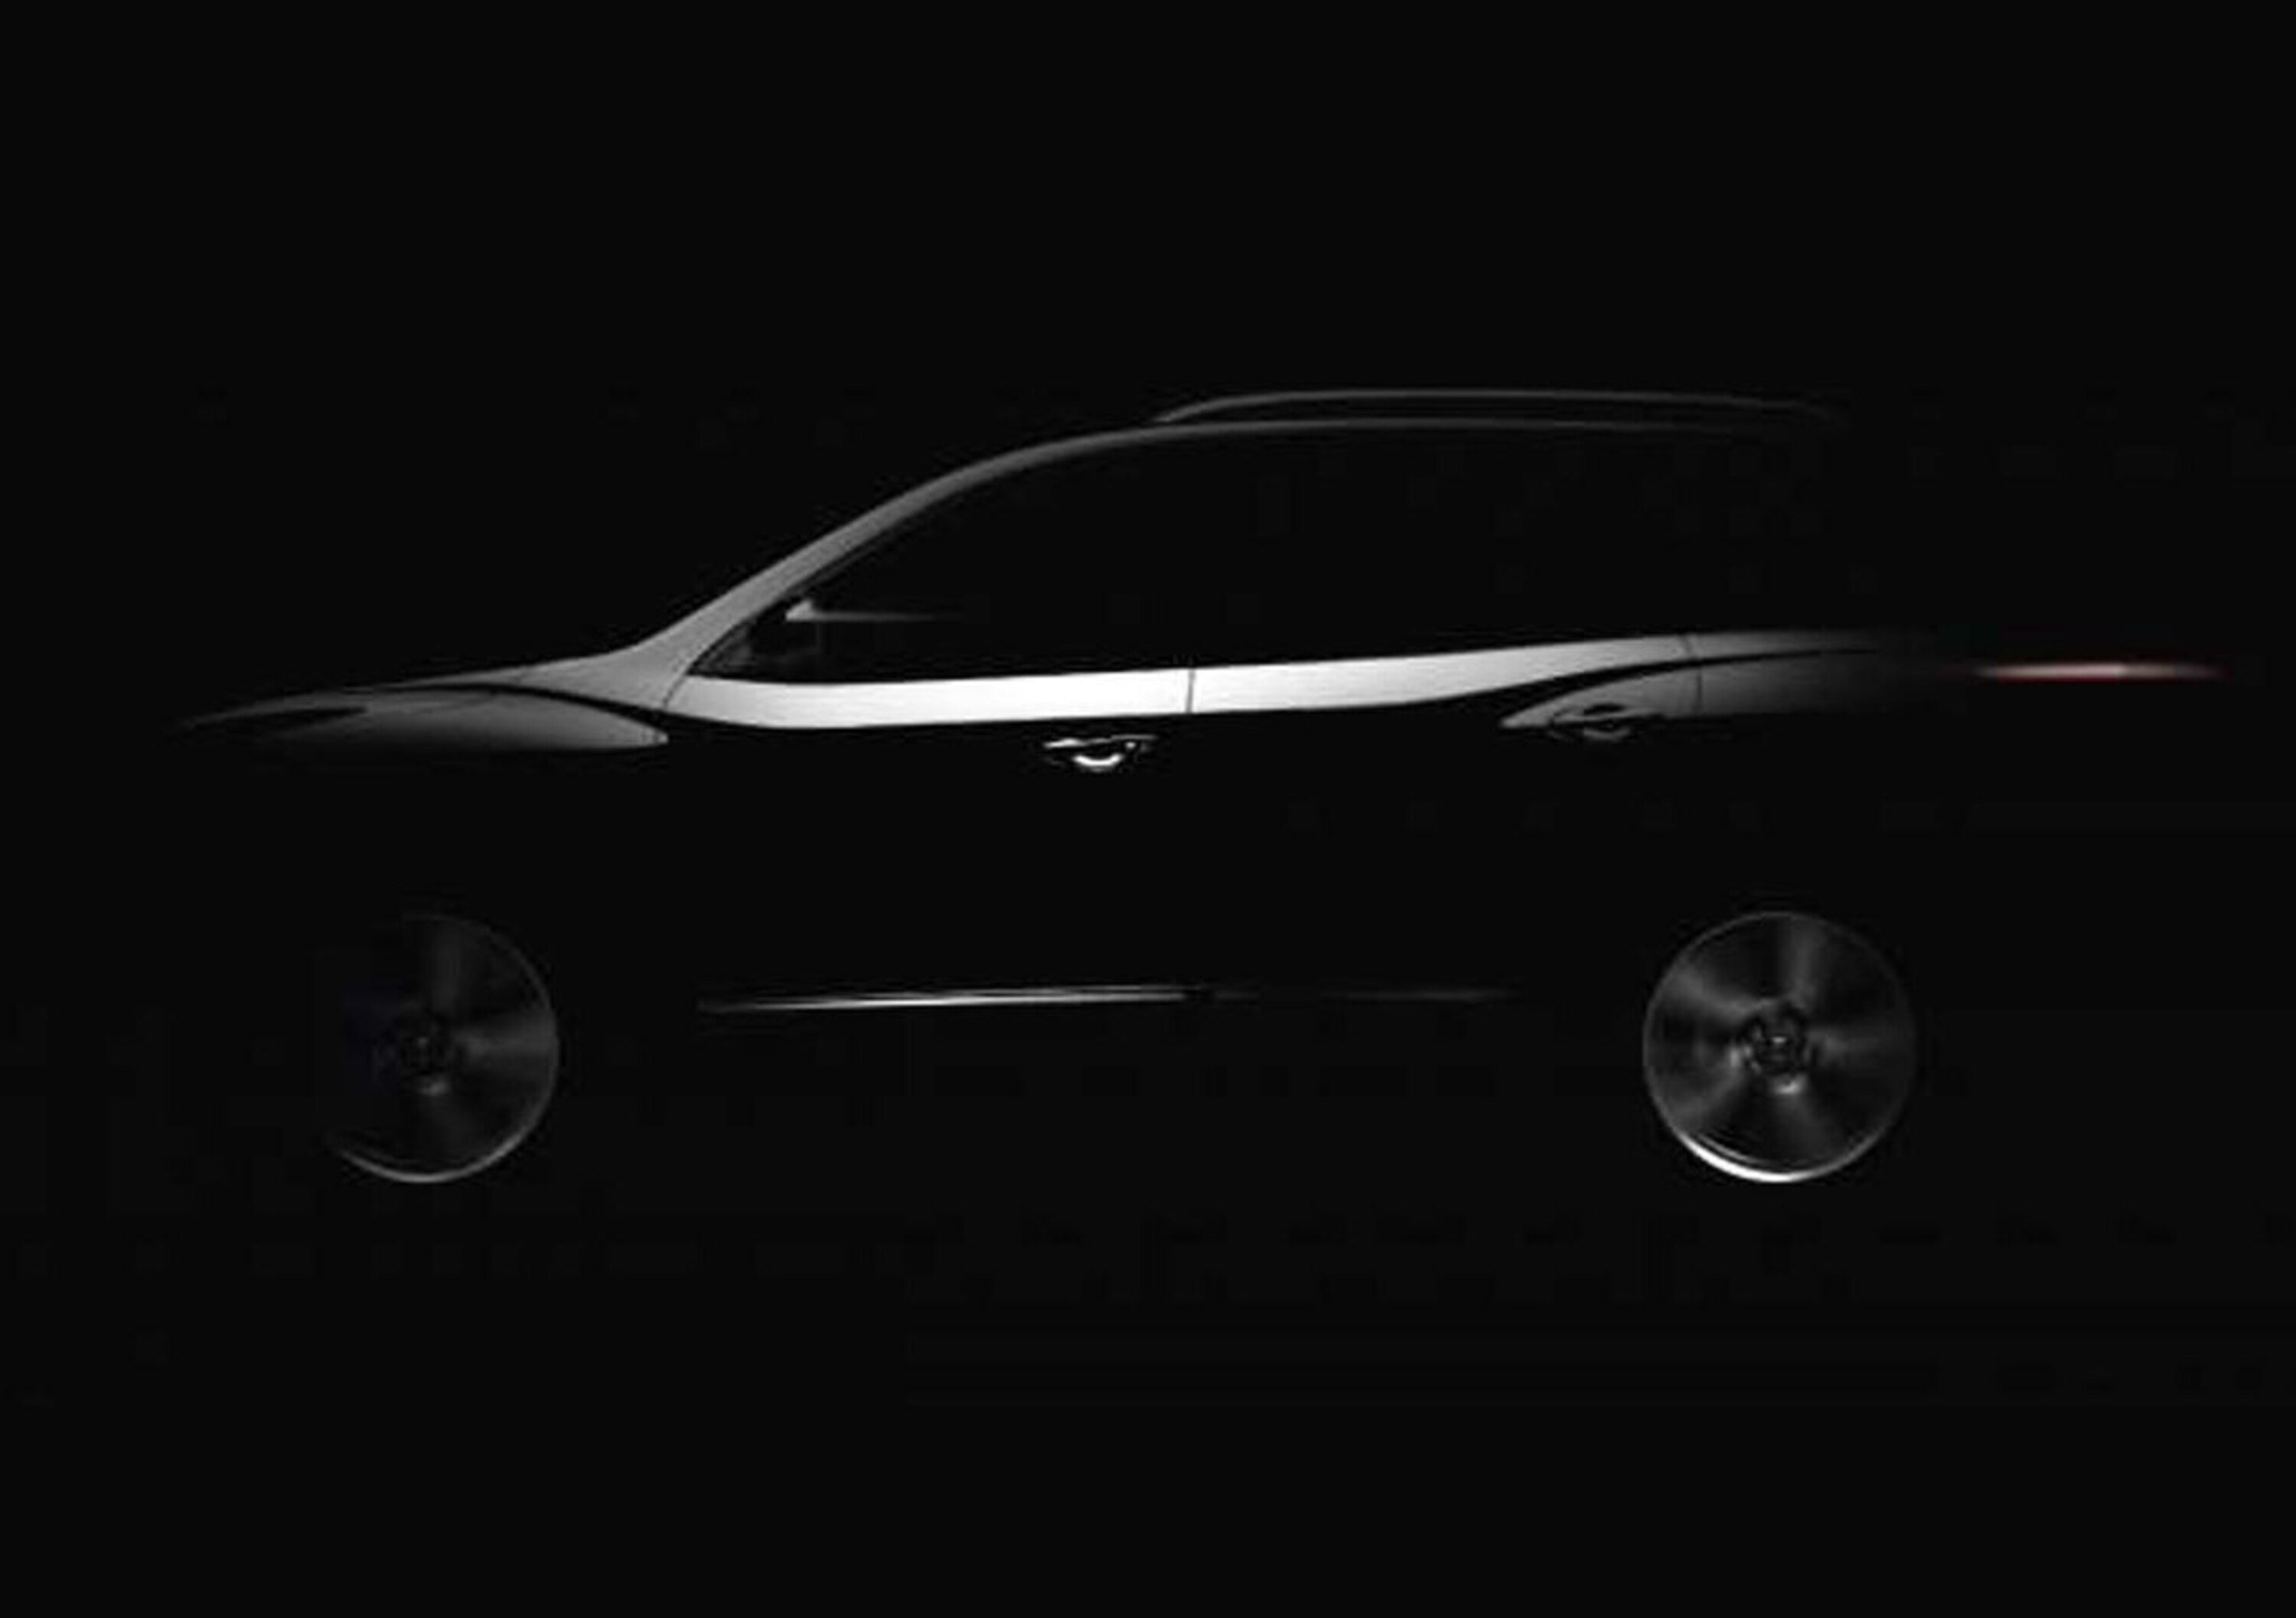 Nuova Nissan Pathfinder: primo teaser ufficiale